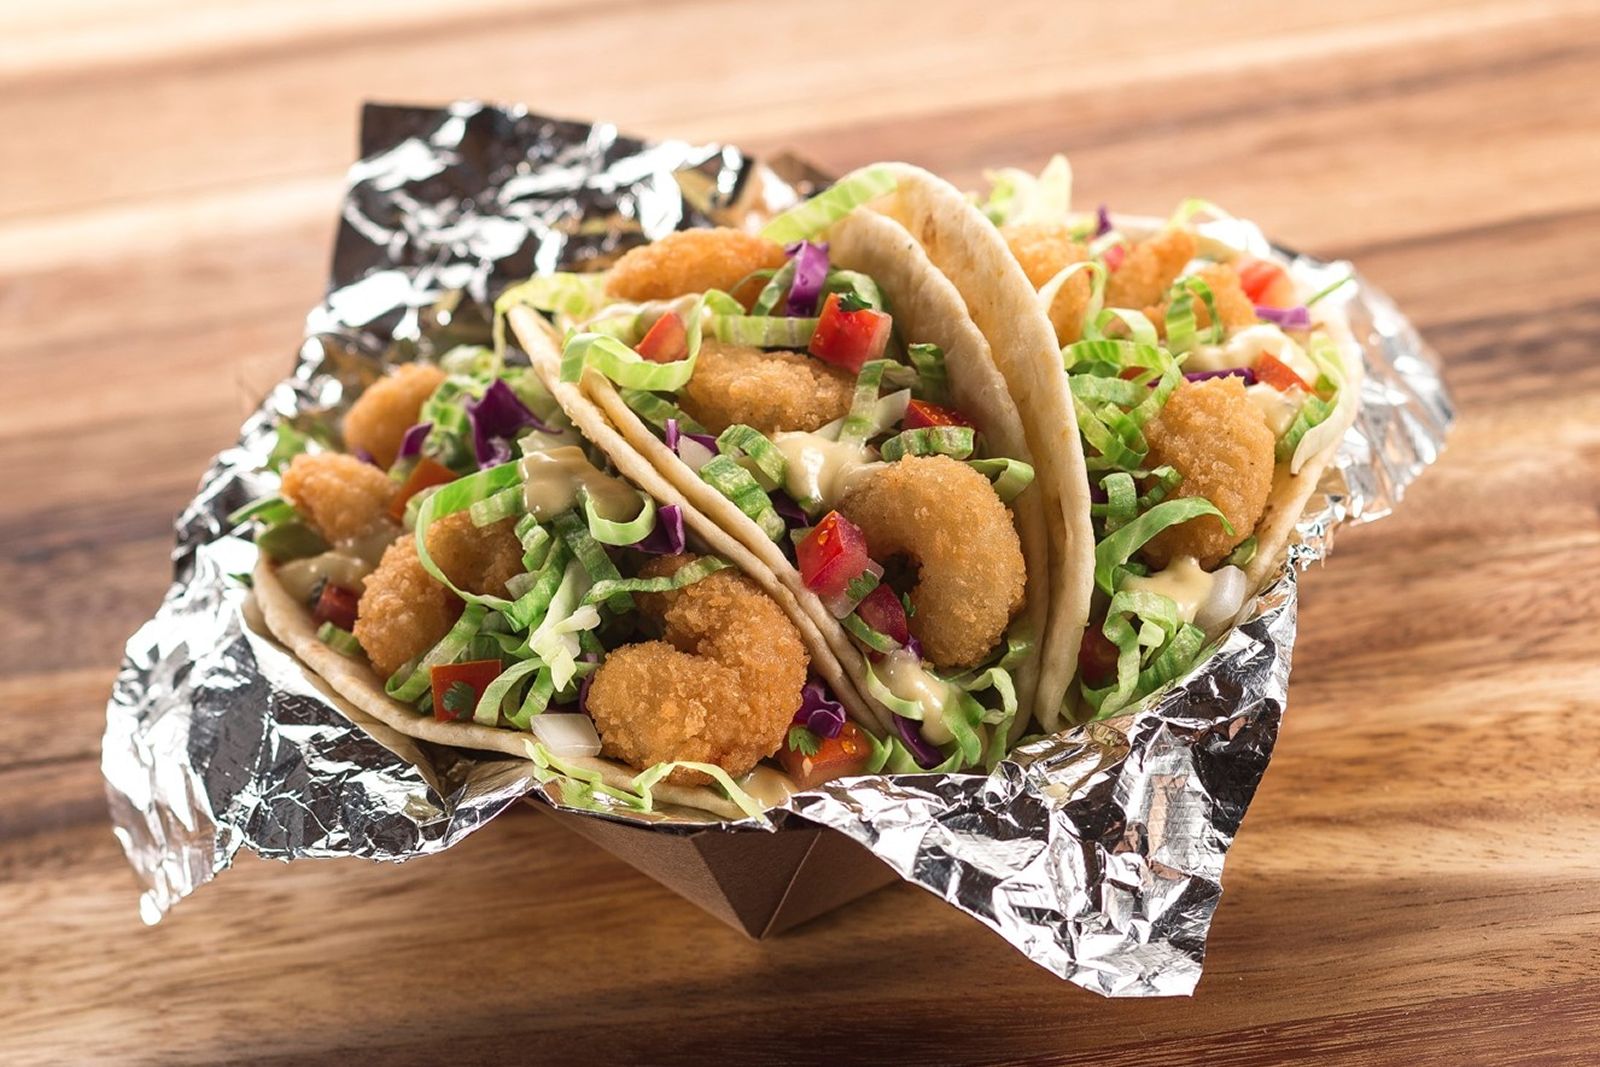 Crispy Fish And Popcorn Shrimp Tacos Return To Taco John's Signature Menu